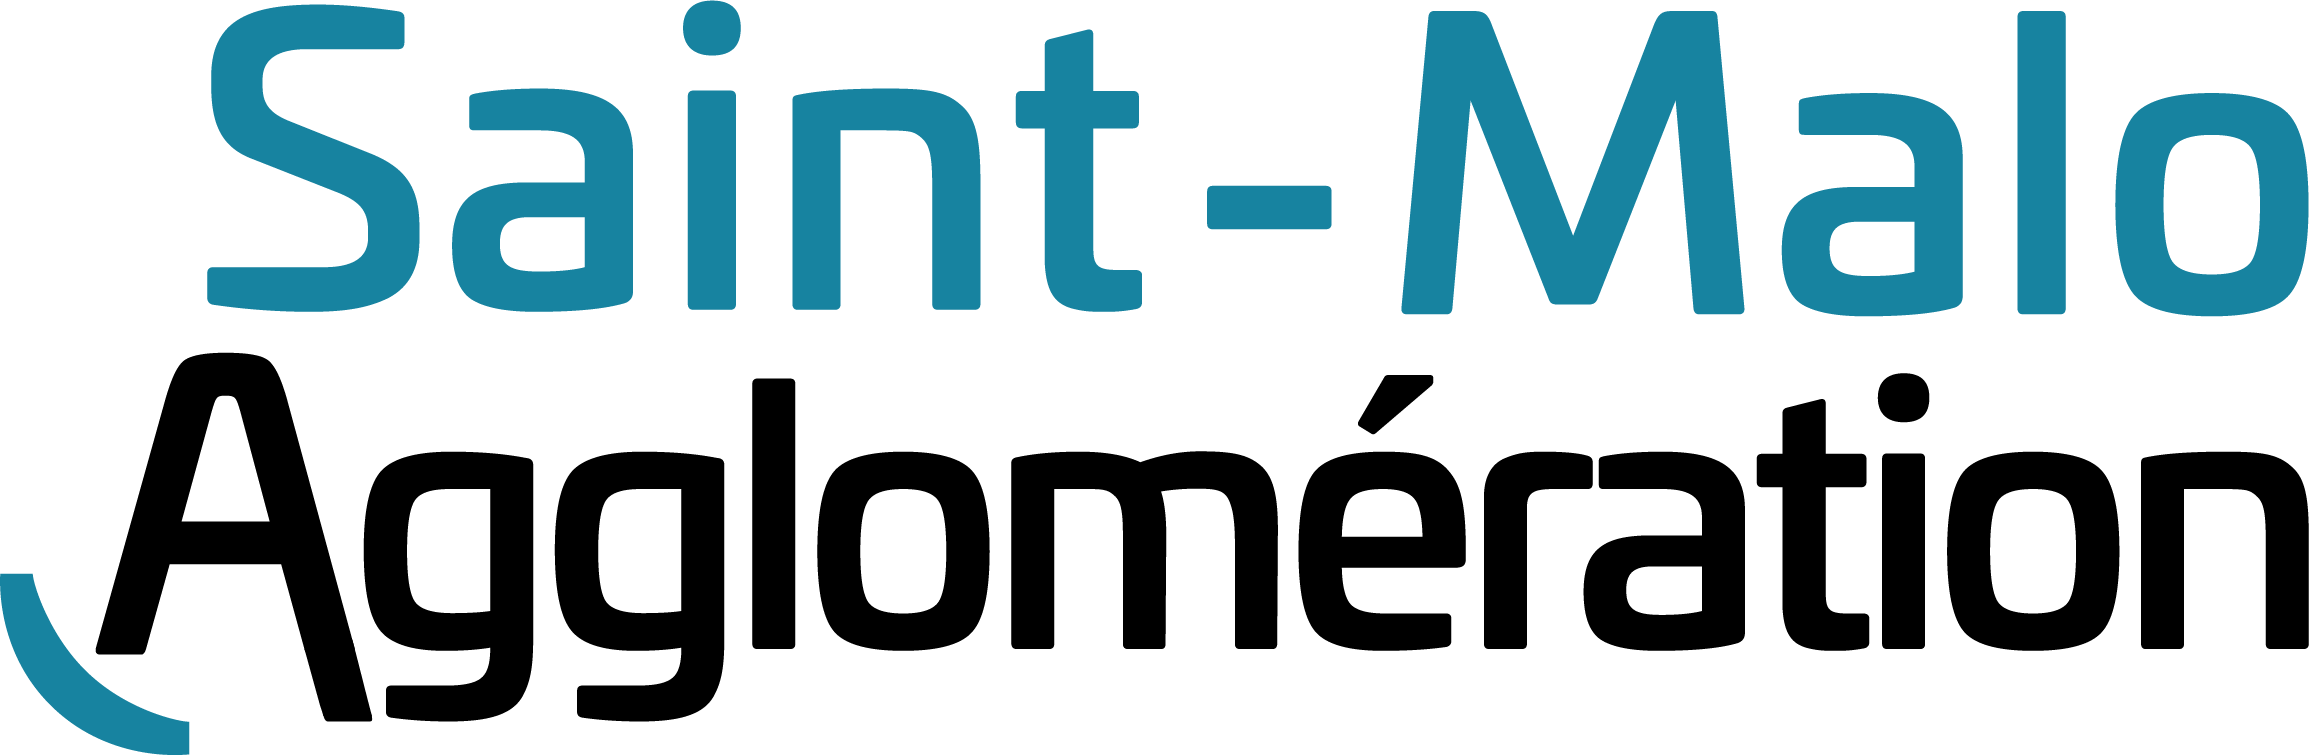 Logo Saint-Malo Agglomération